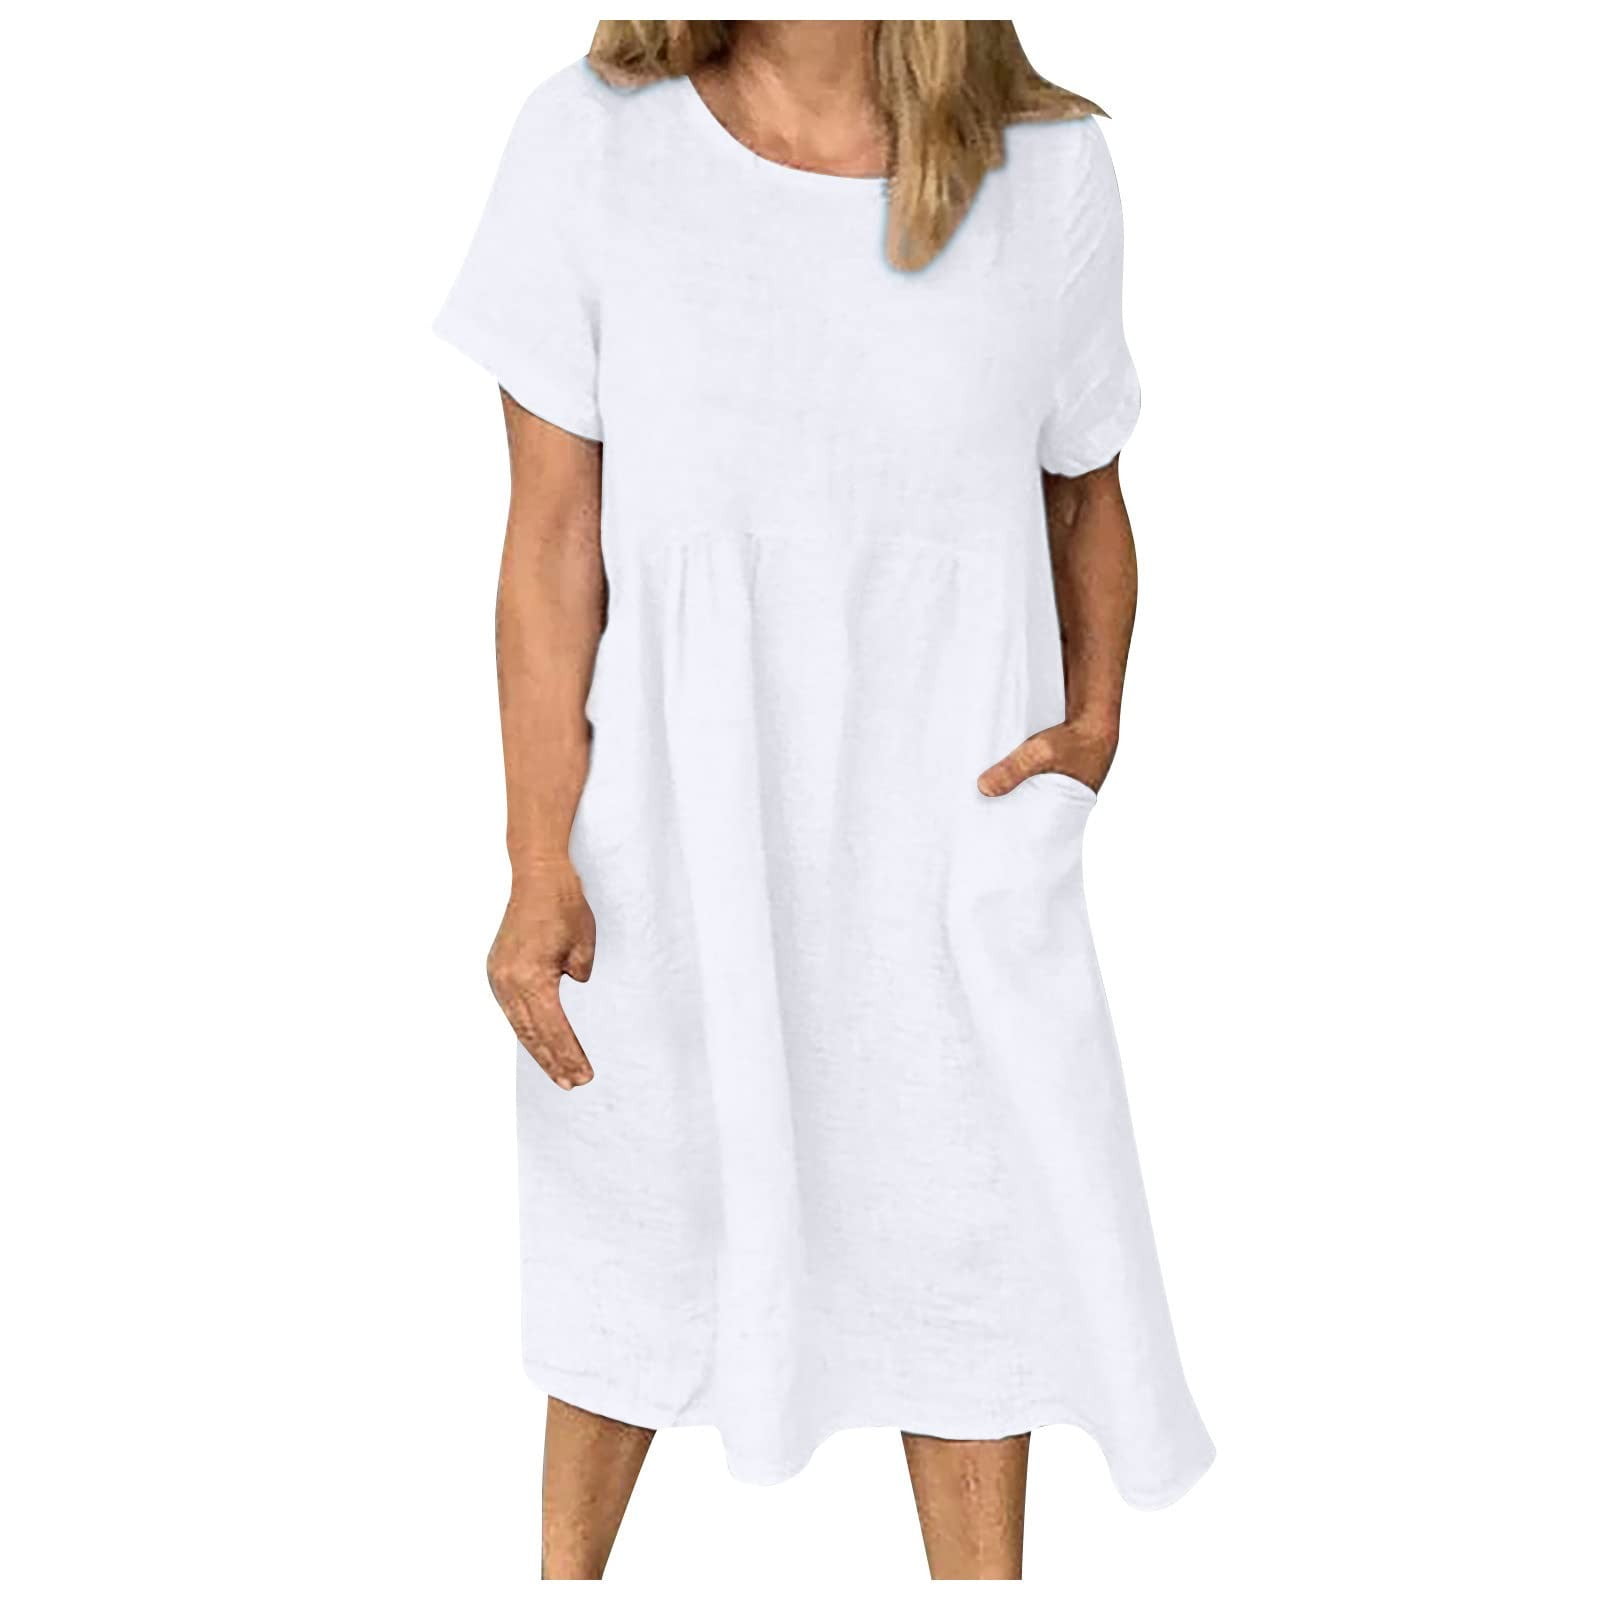 Ruziyoog White Dress for Women, Short Sleeve Round-Neck with Pocket  Sundresses, Vintage Cotton Linen Long Dress, Loose Casual Retro Beach Dress  S 